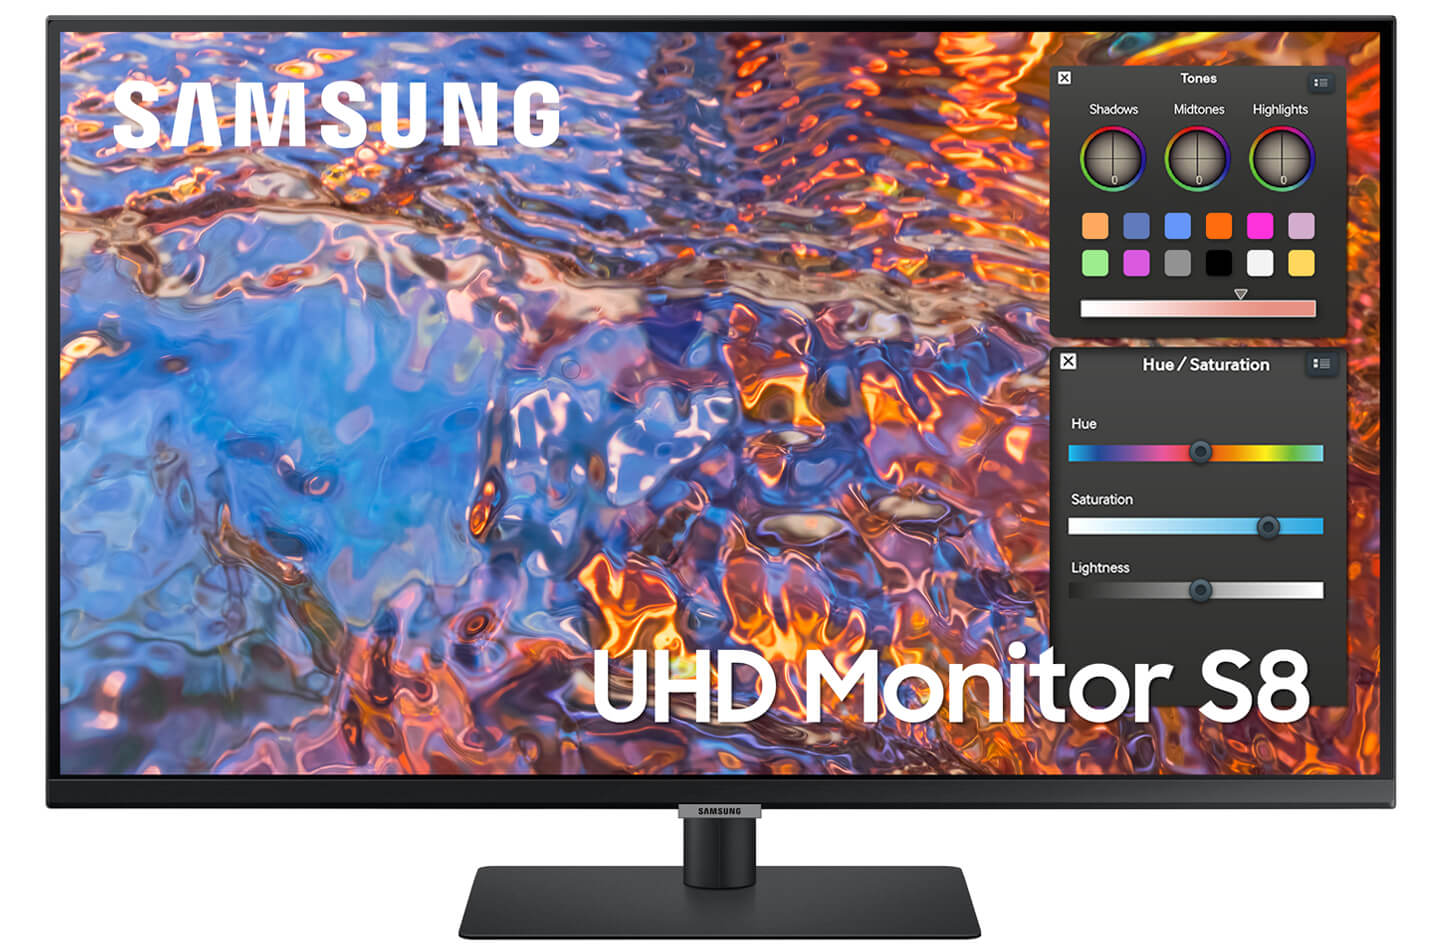 Samsung UHD monitor S8